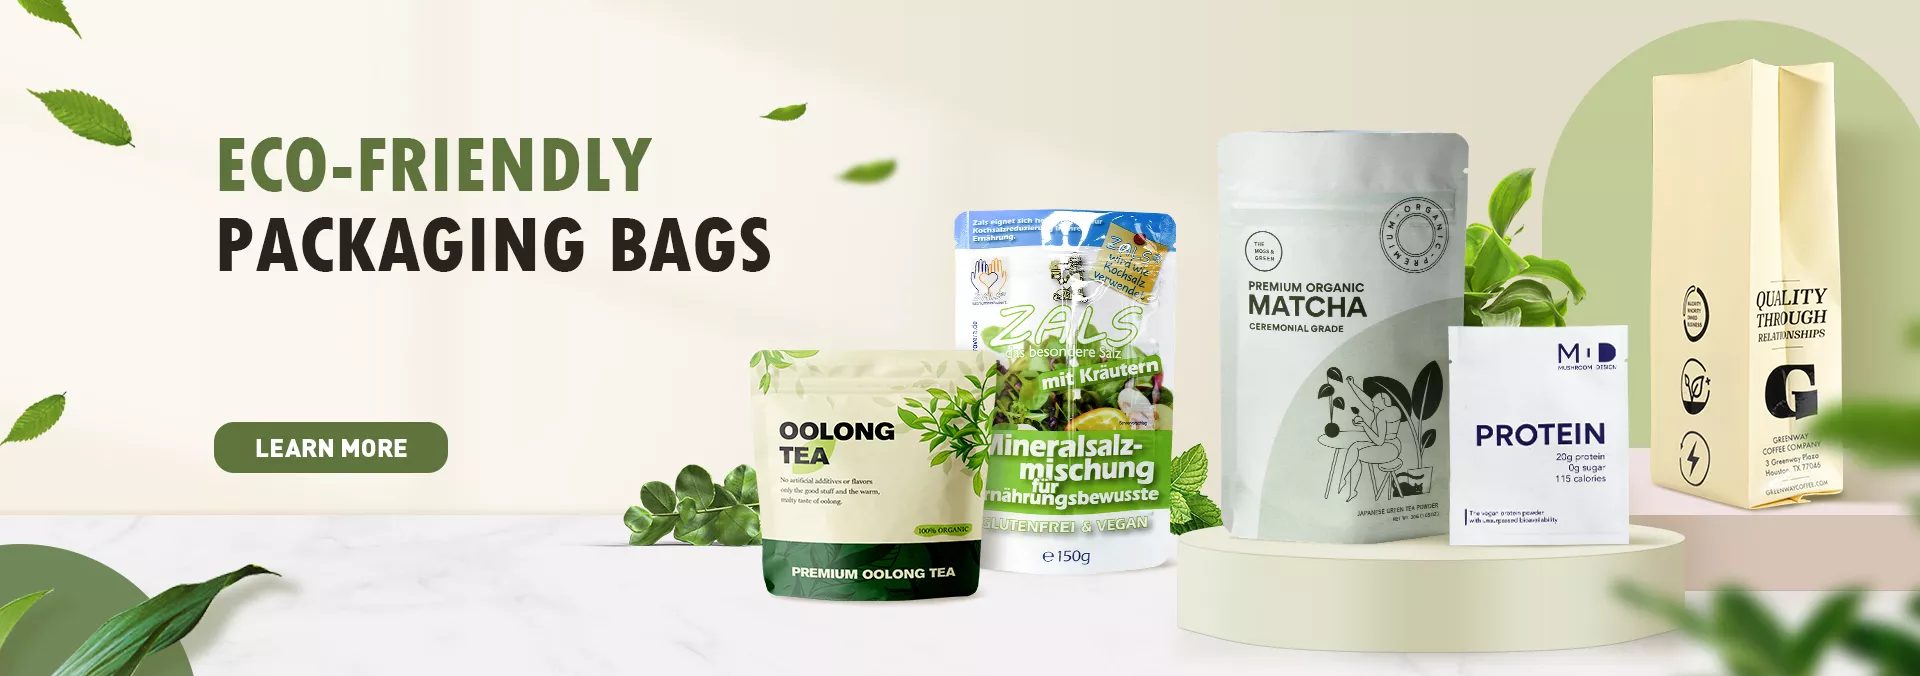 eco-friendly coffee bags